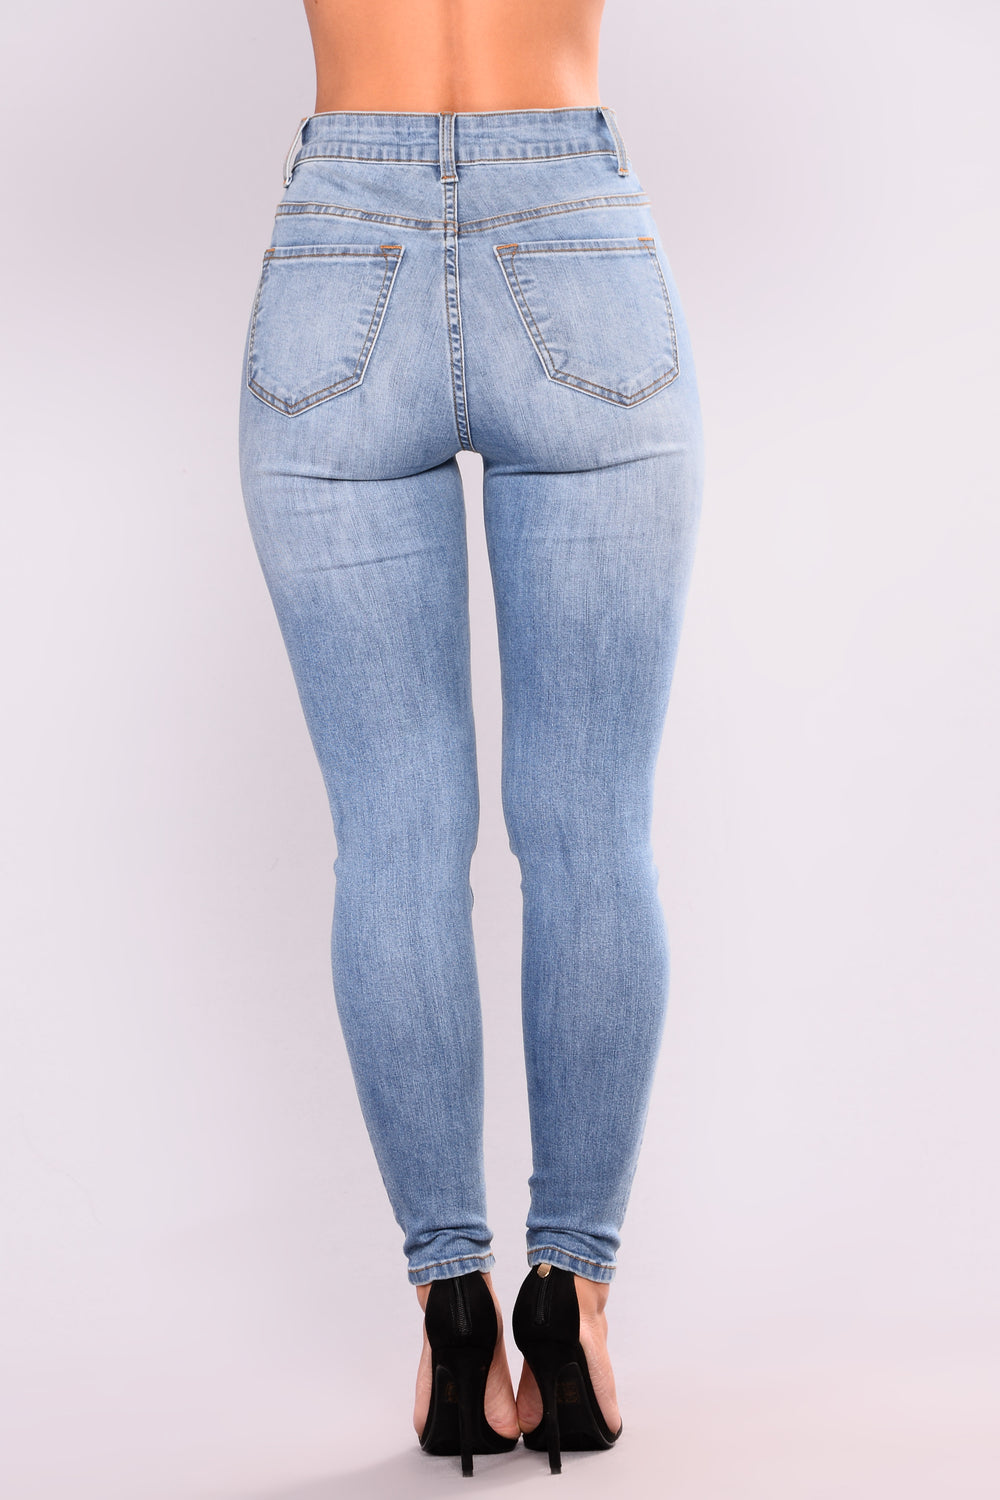 Nixie Pearl Skinny Jeans Light Blue Wash